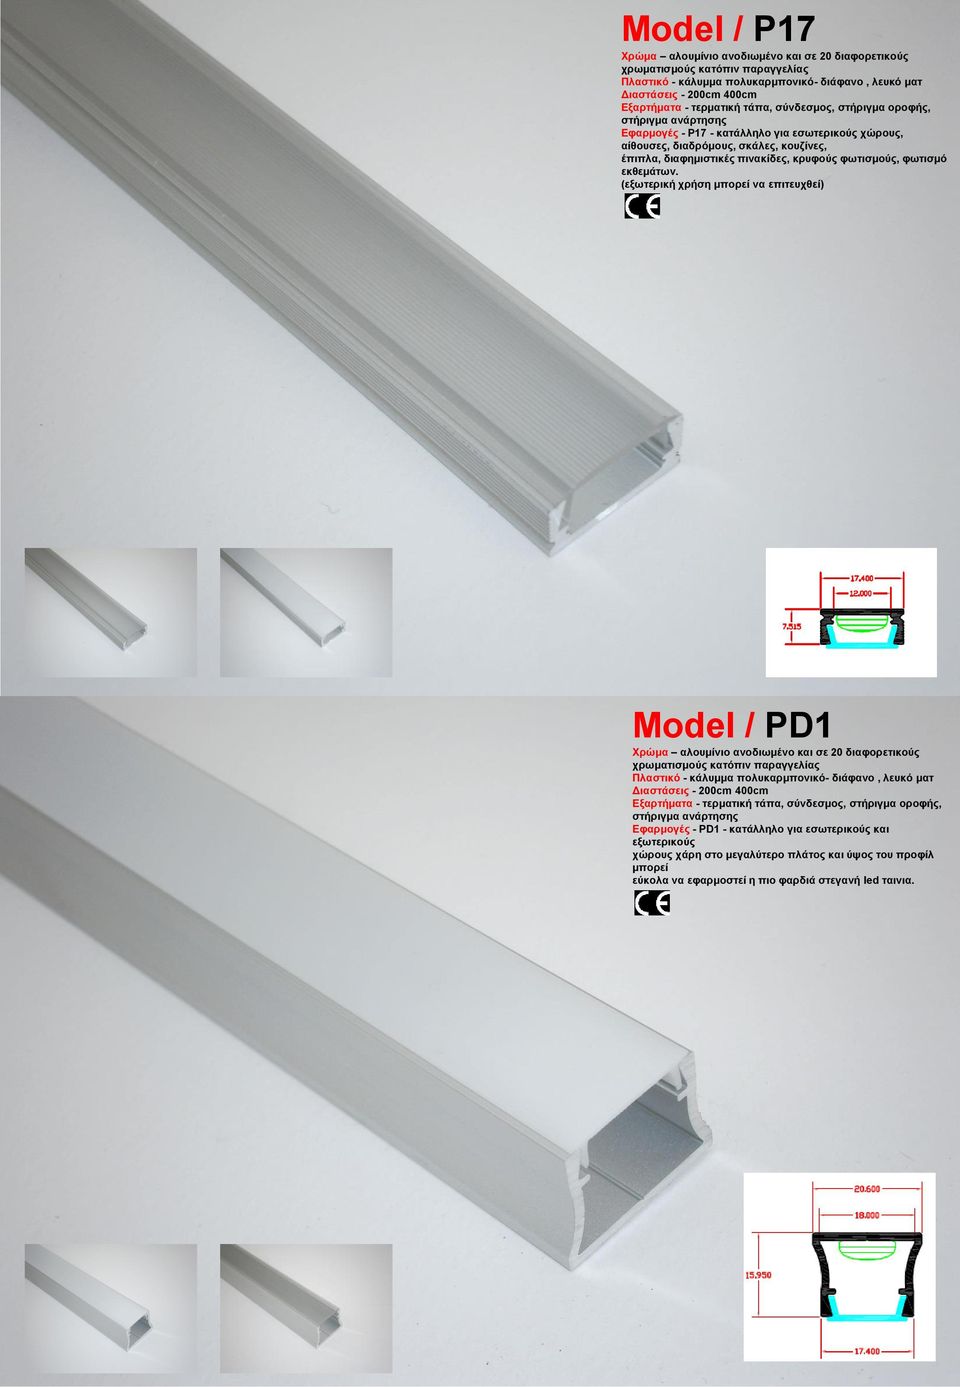 Model / PD1 Χρώμα αλουμίνιο ανοδιωμένο και σε 20 διαφορετικούς Πλαστικό - κάλυμμα πολυκαρμπονικό- διάφανο, λευκό ματ Εξαρτήματα - τερματική τάπα, σύνδεσμος, στήριγμα οροφής,